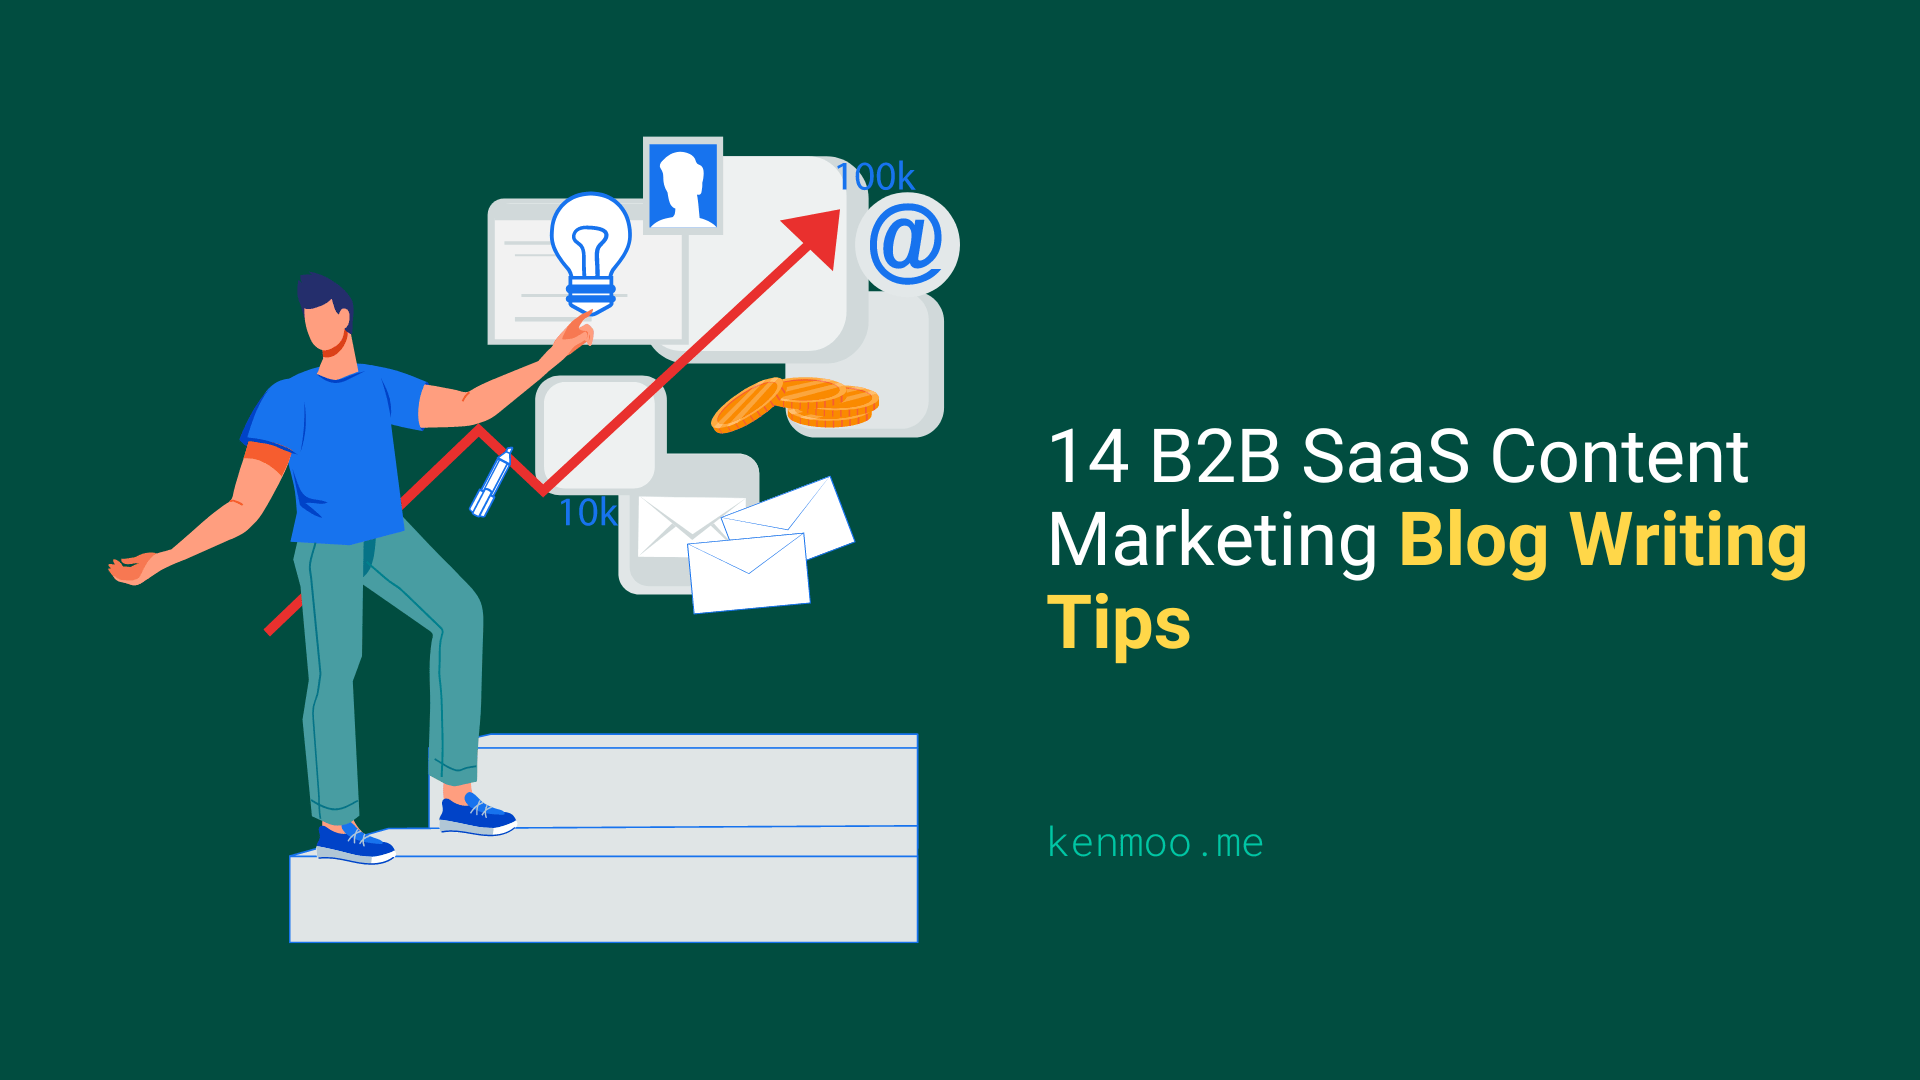 14 B2B SaaS Content Marketing Blog Writing Tips